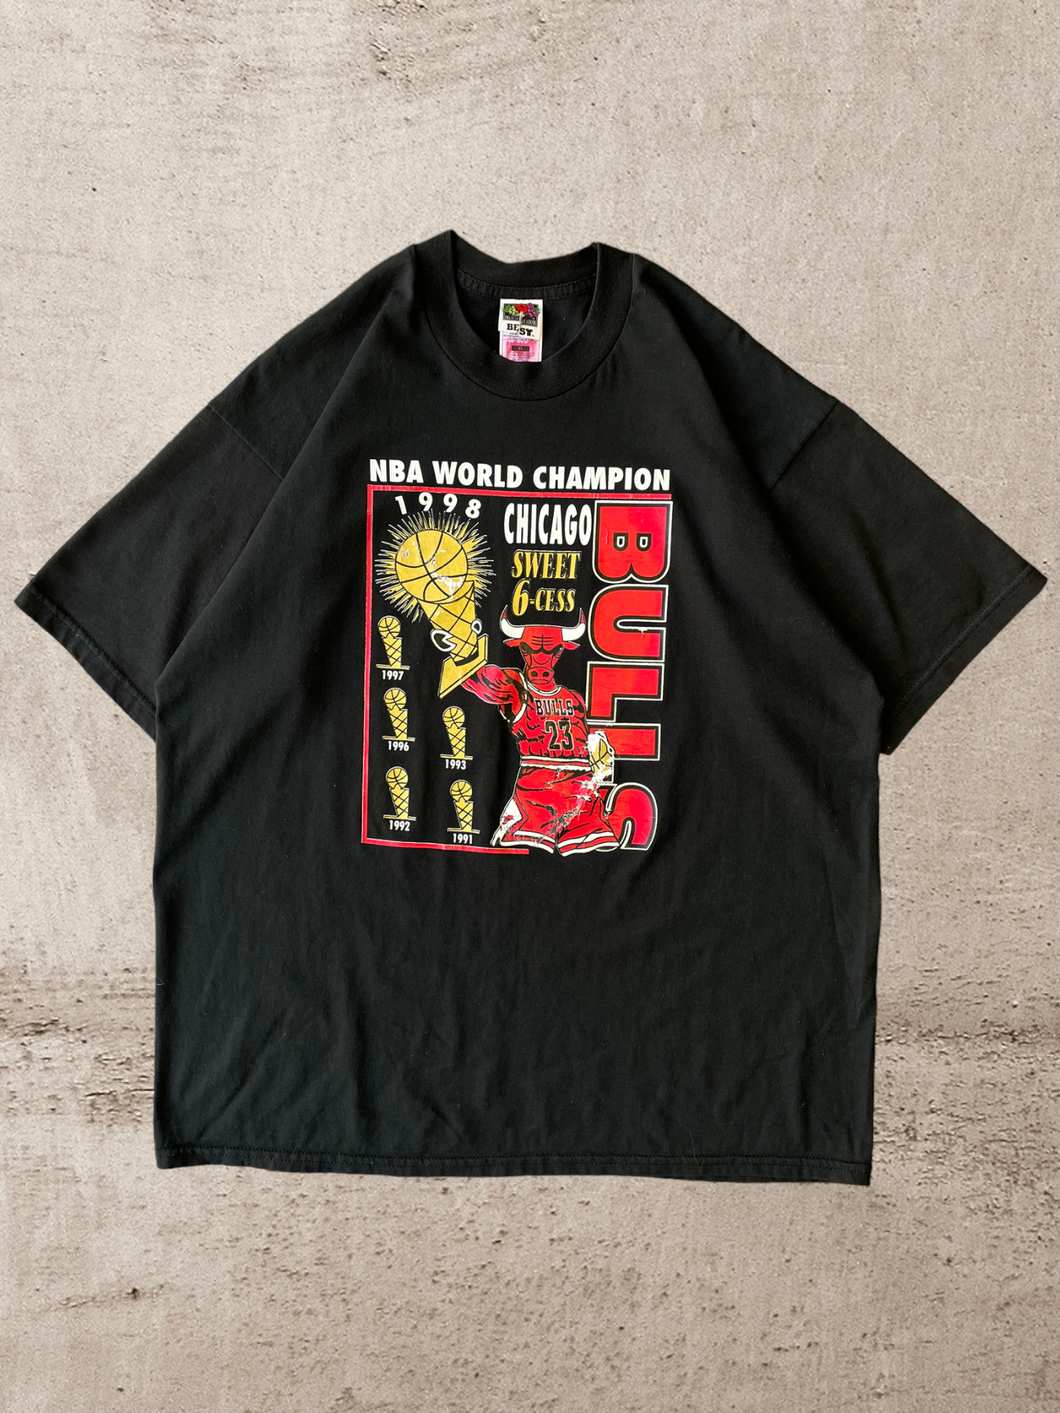 1998 Chicago Bulls 6x Champions T-Shirt - XL